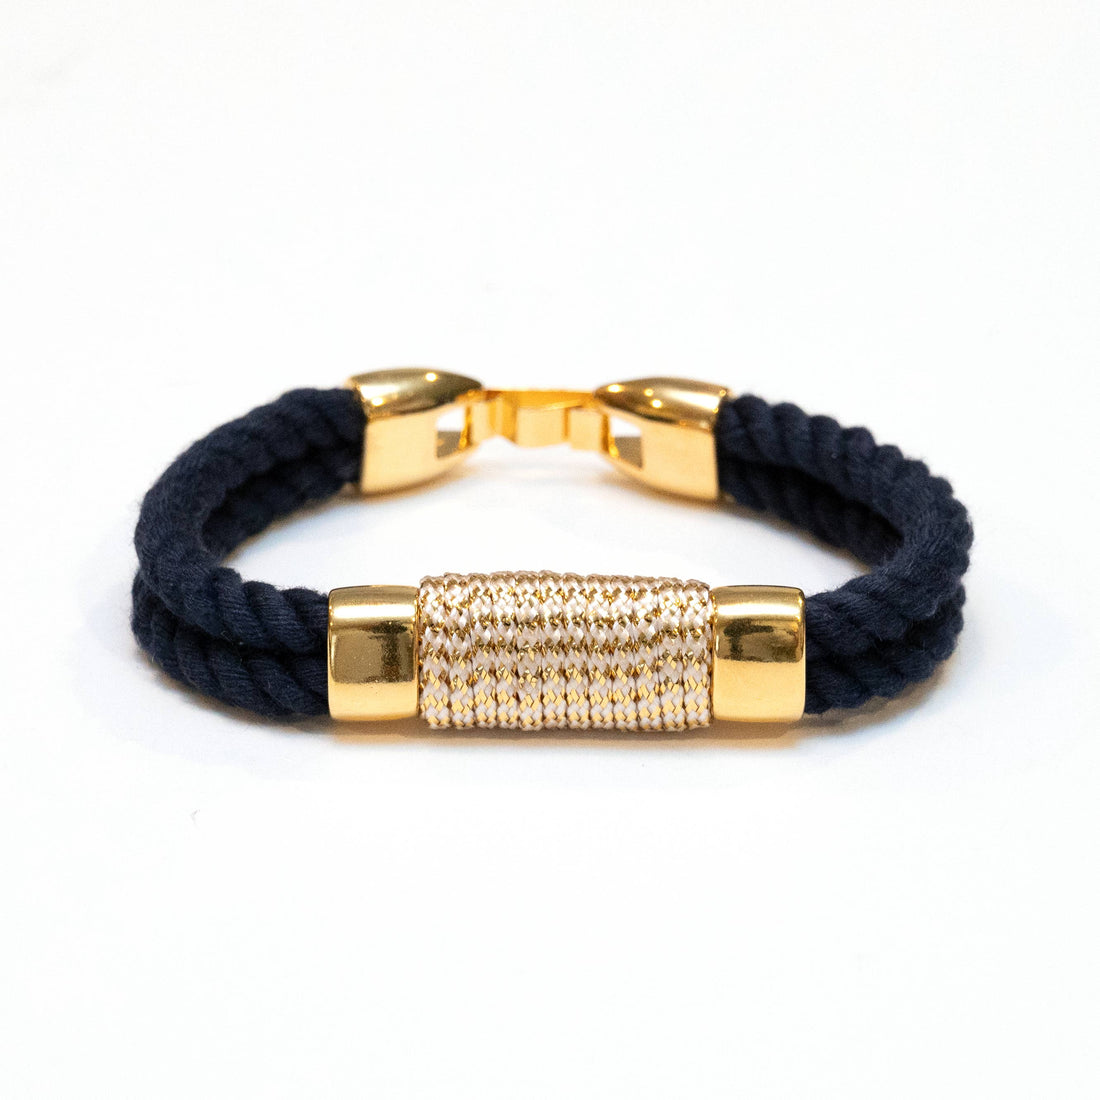 Tremont Bracelet - Navy/Metallic Gold: M